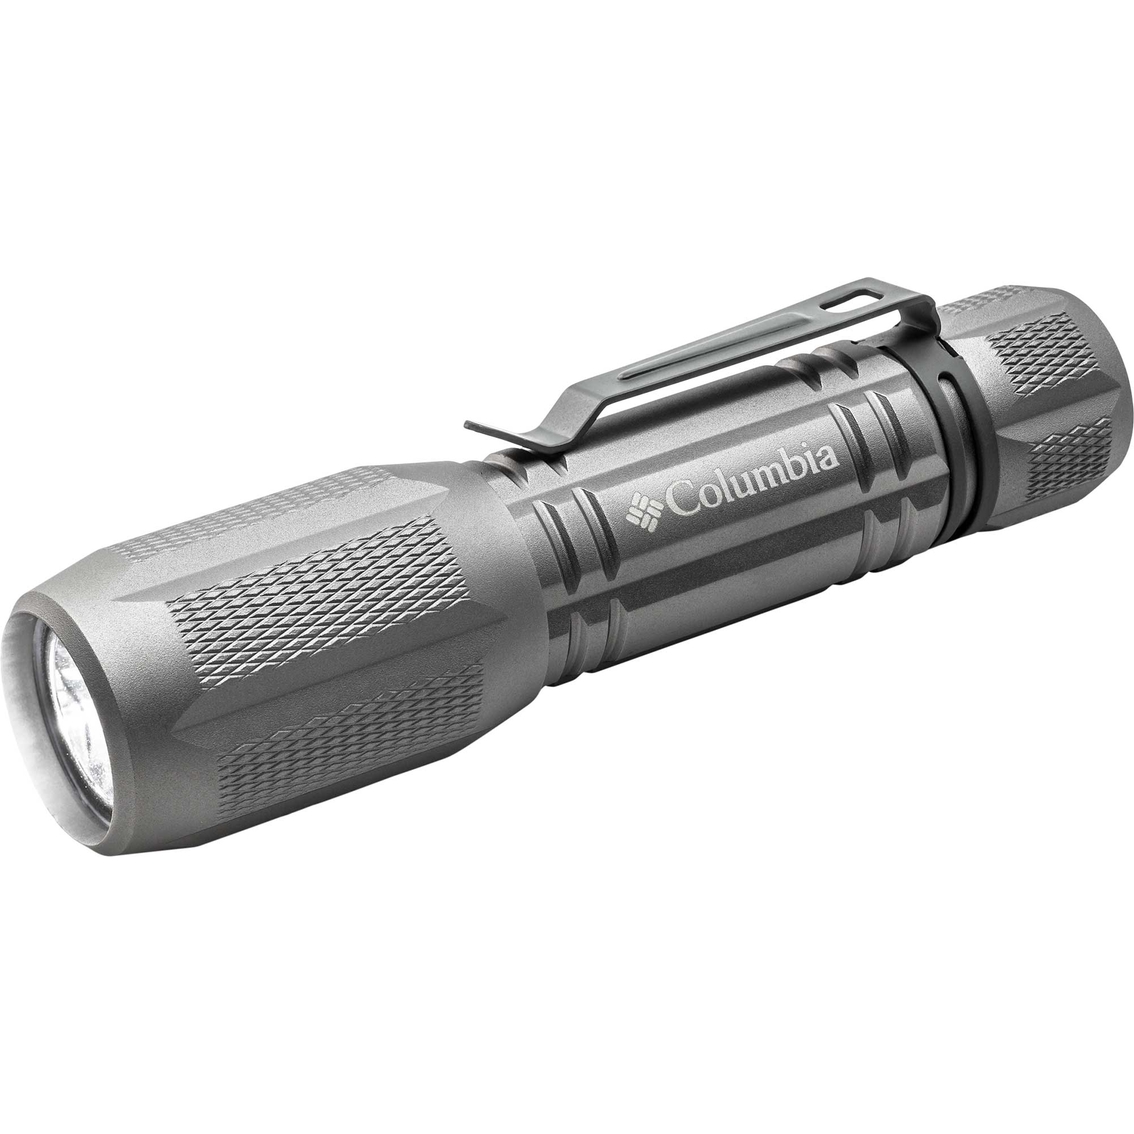 Columbia 150L Flashlight - Image 2 of 4